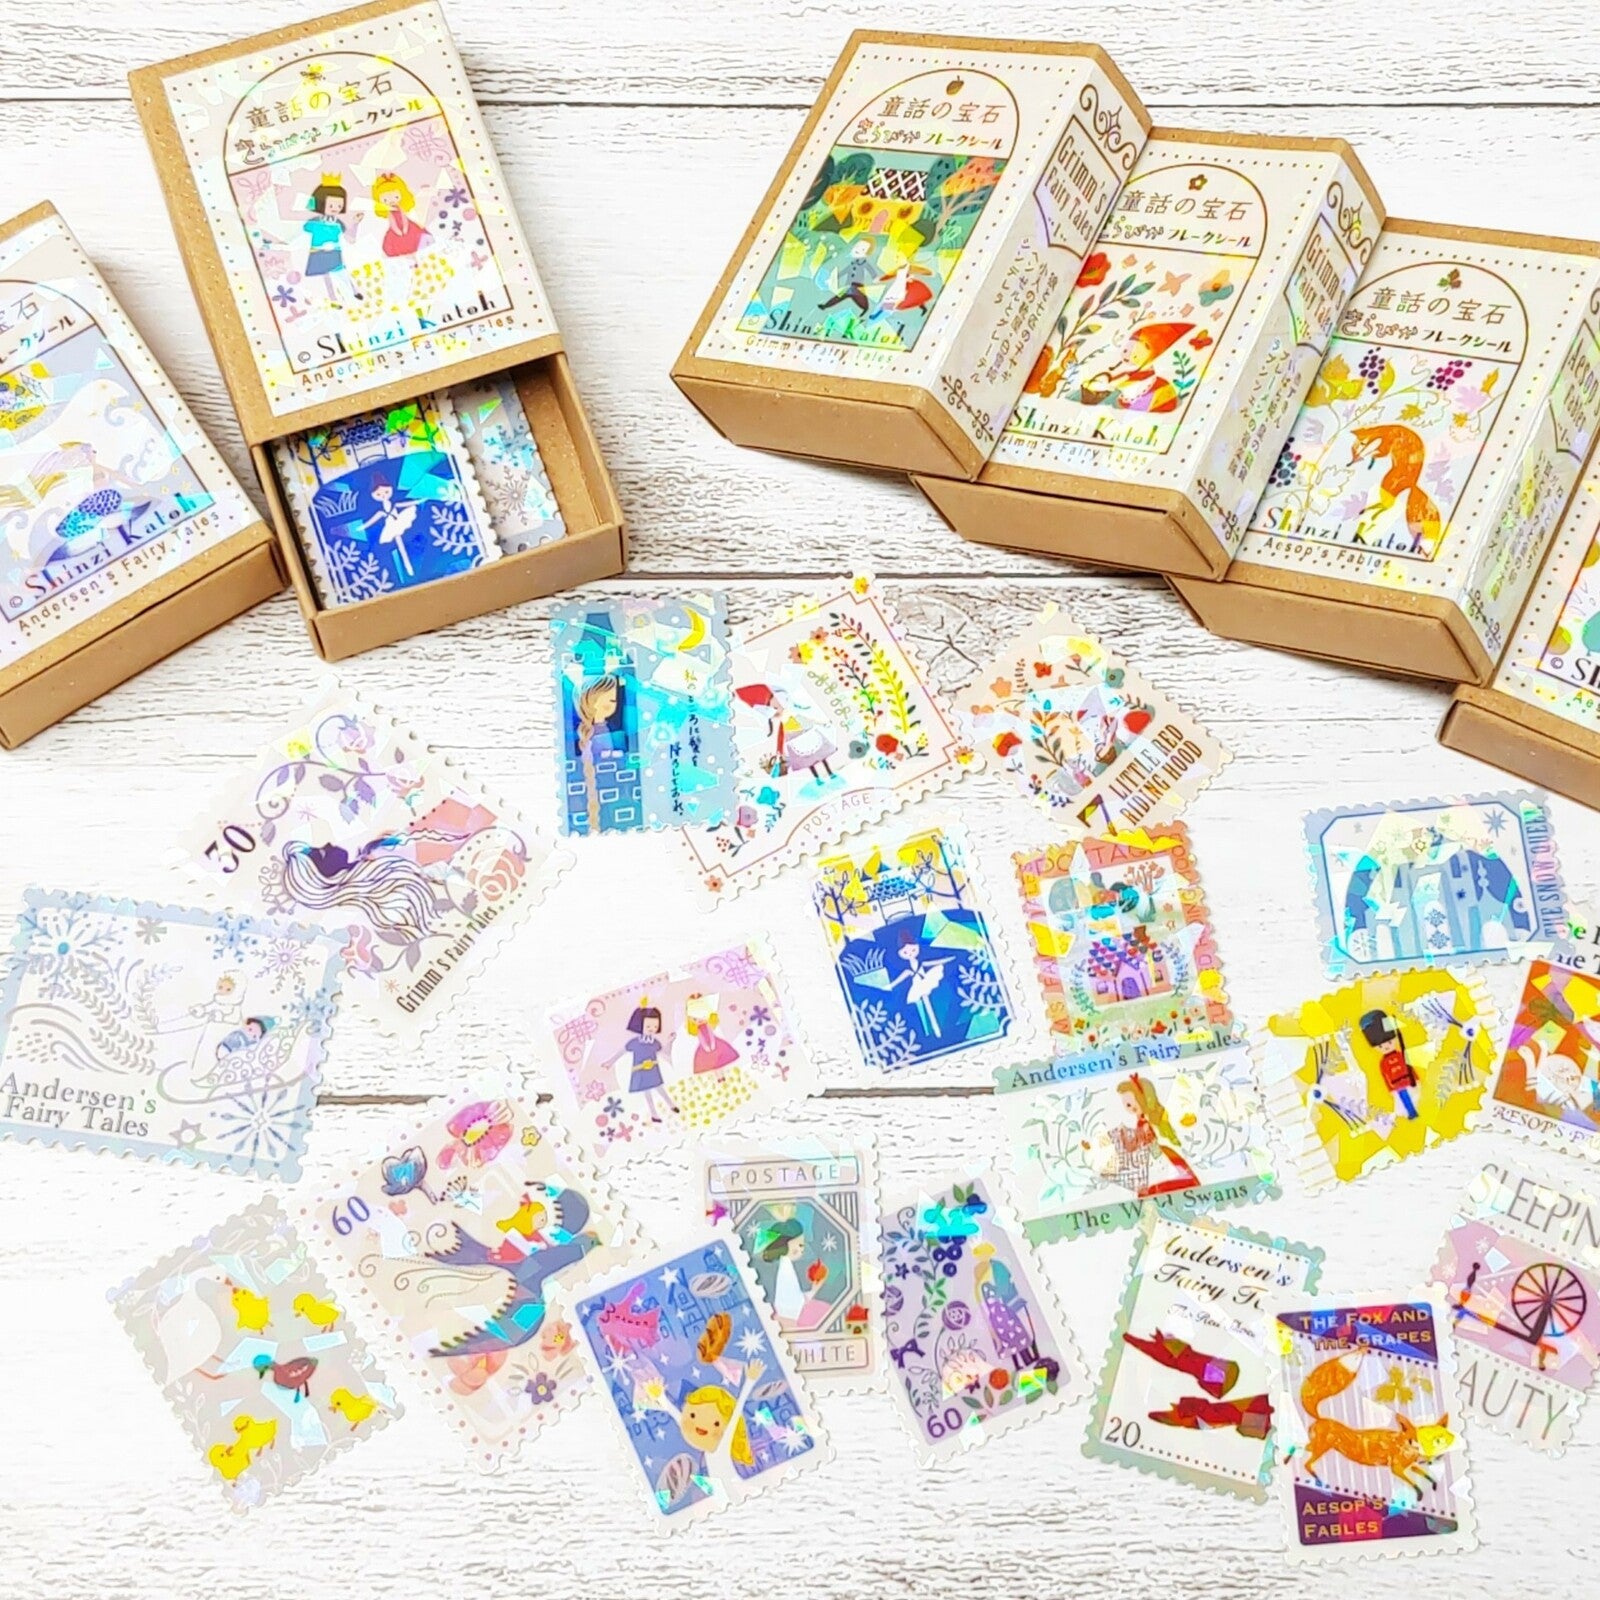 Shinzi Katoh Sticker Seals: Classic Fairy Tales